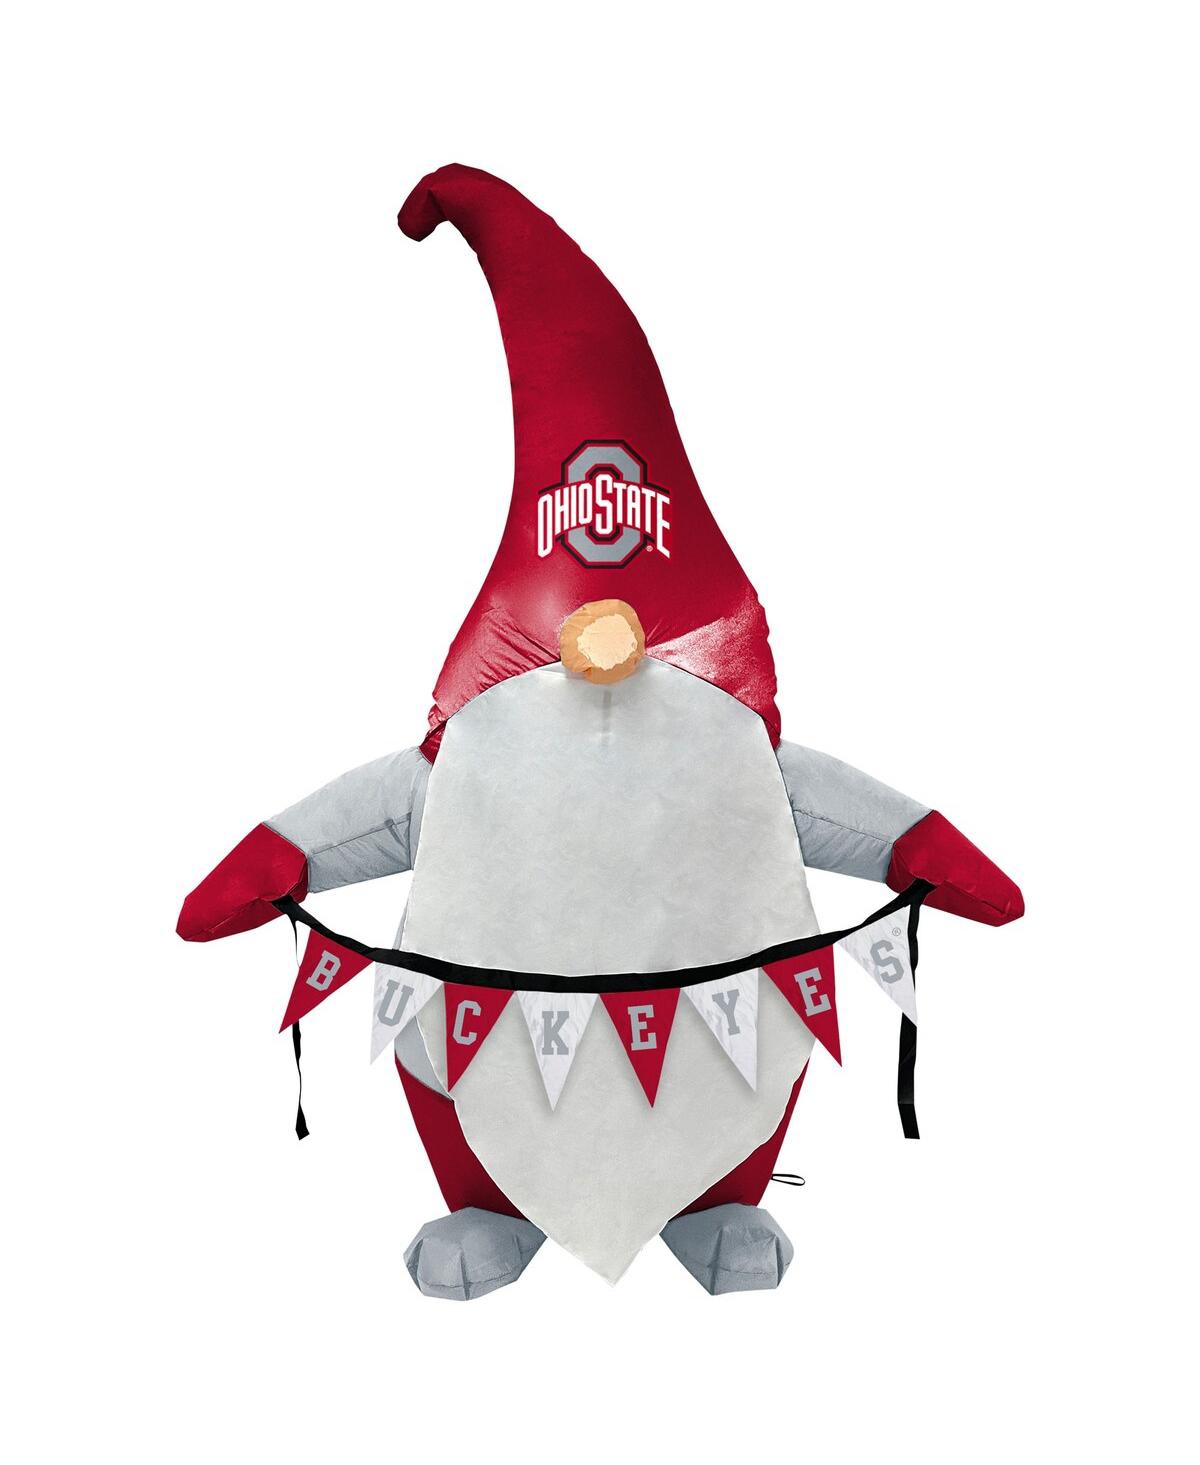 Pegasus Ohio State Buckeyes Inflatable Gnome - Red, White